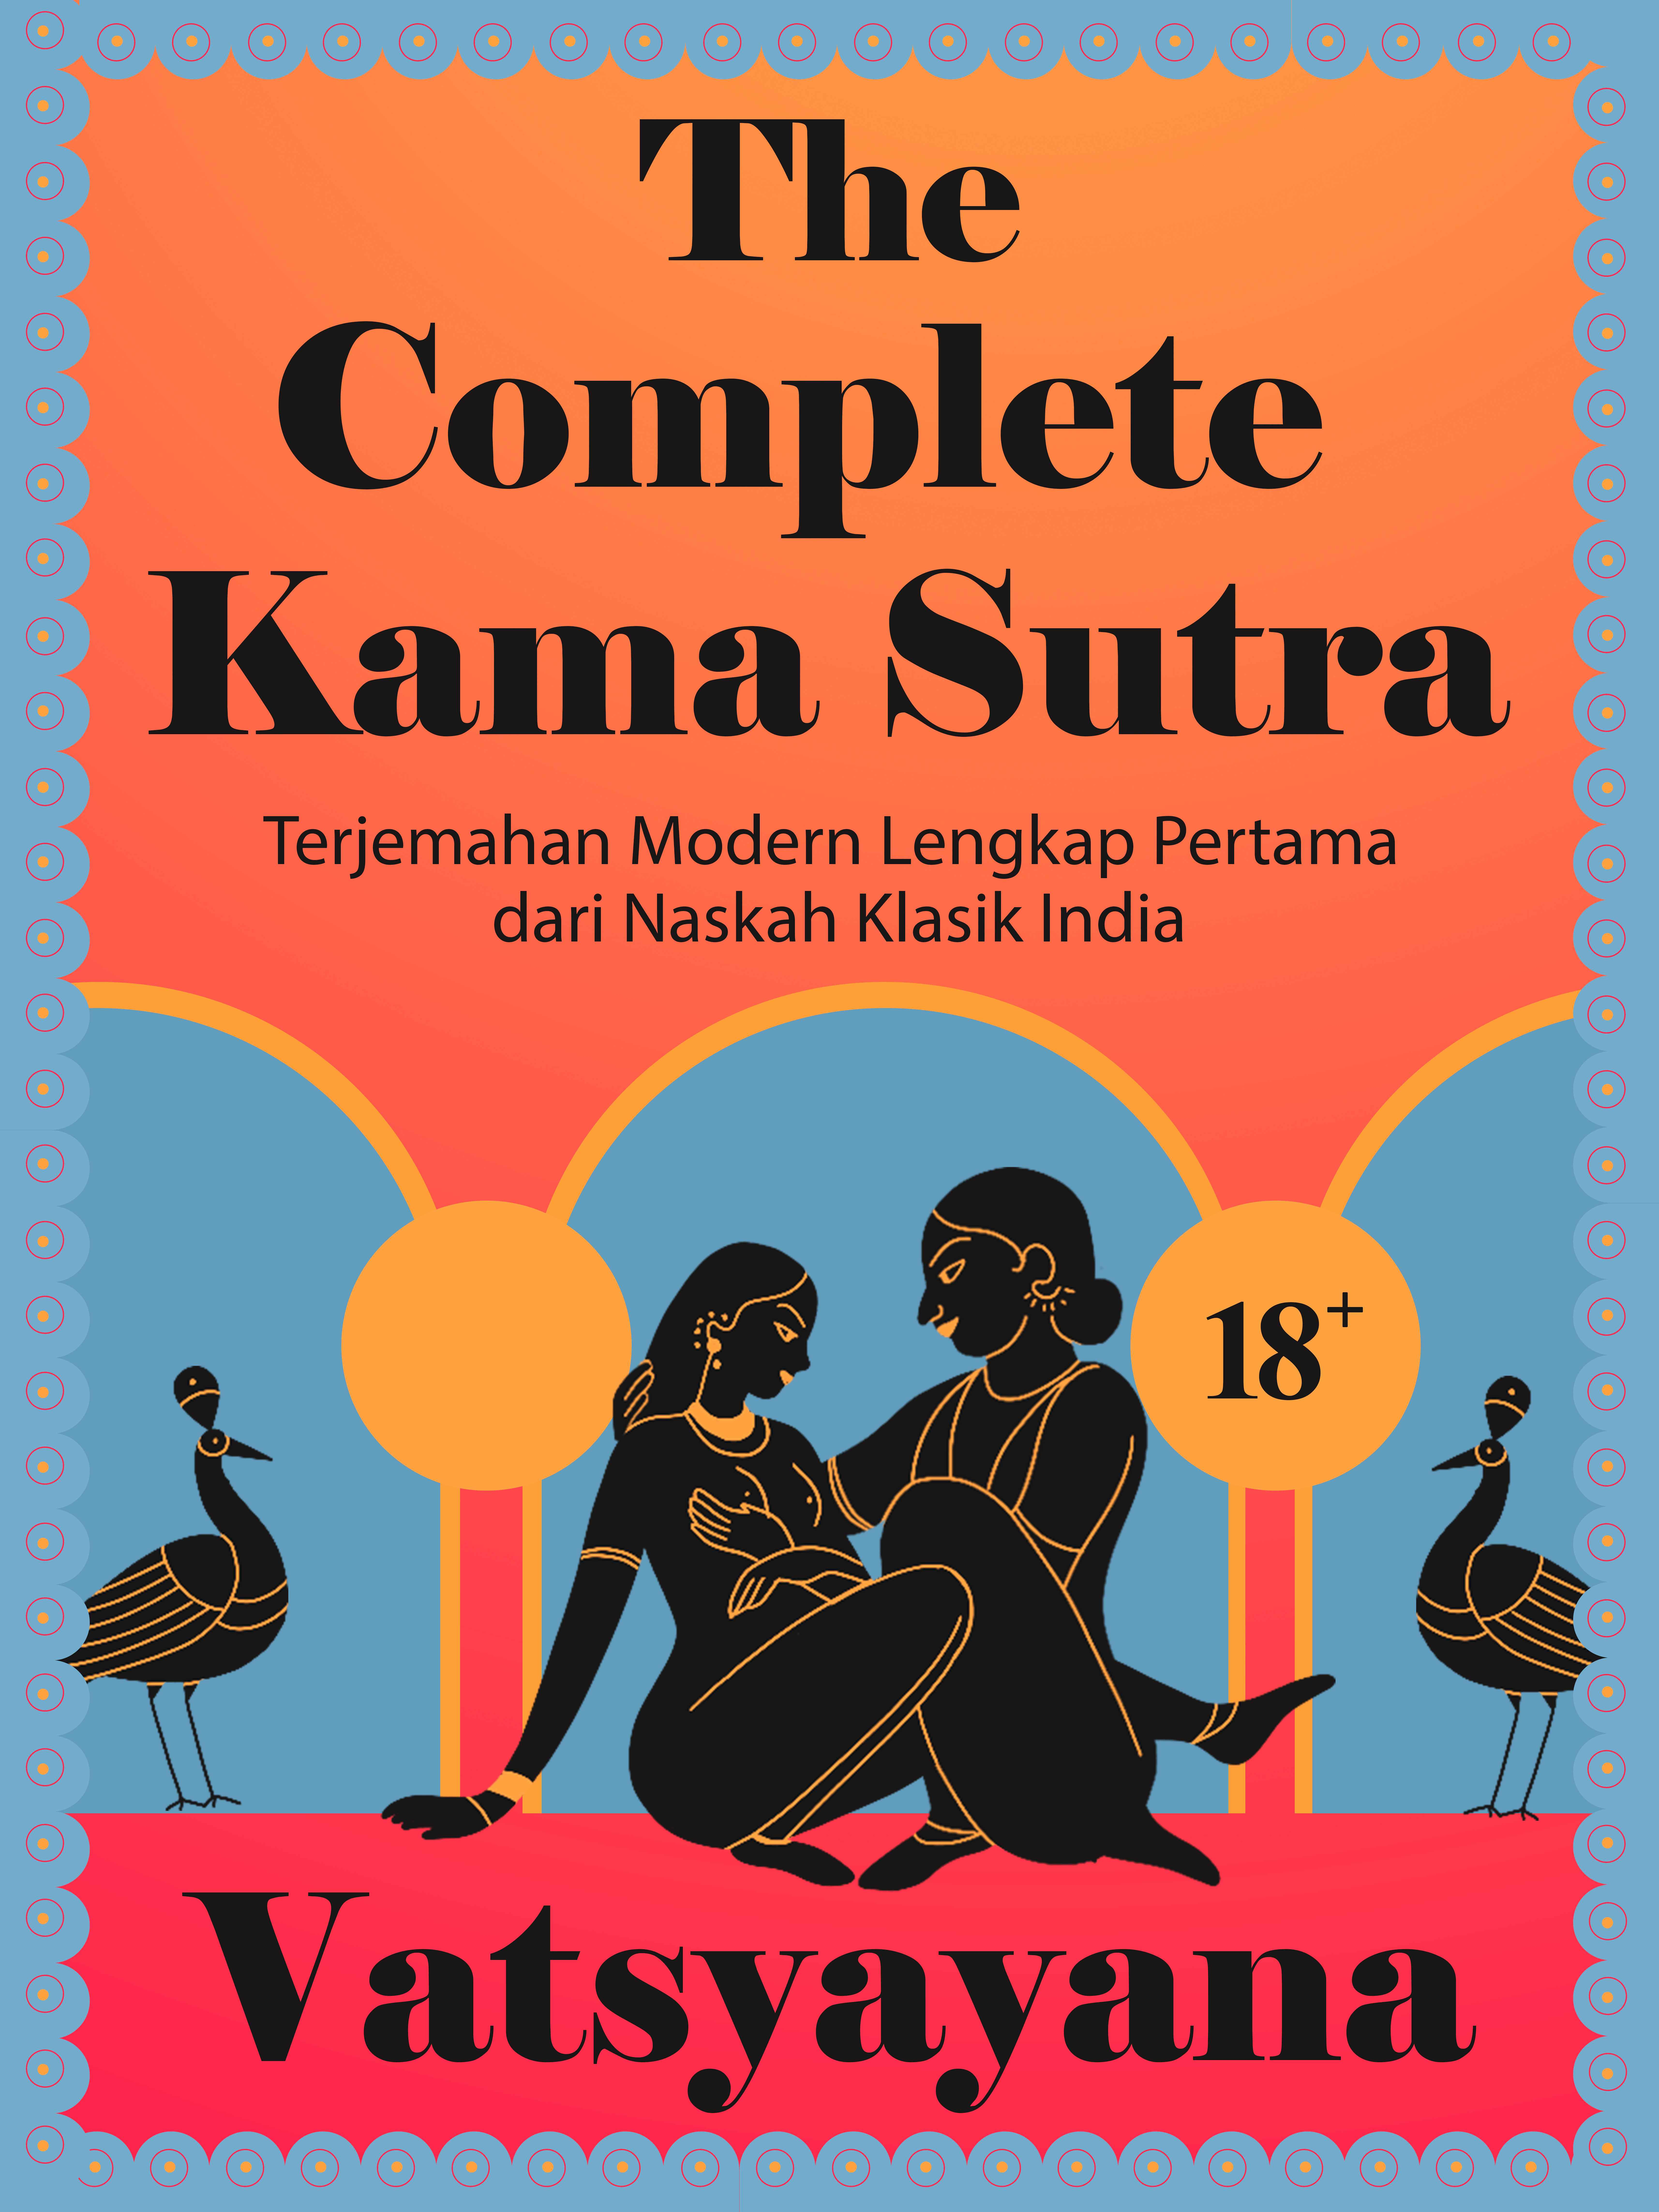 #6 Mengenal berbagai posisi bercinta khas Kama Sutra.